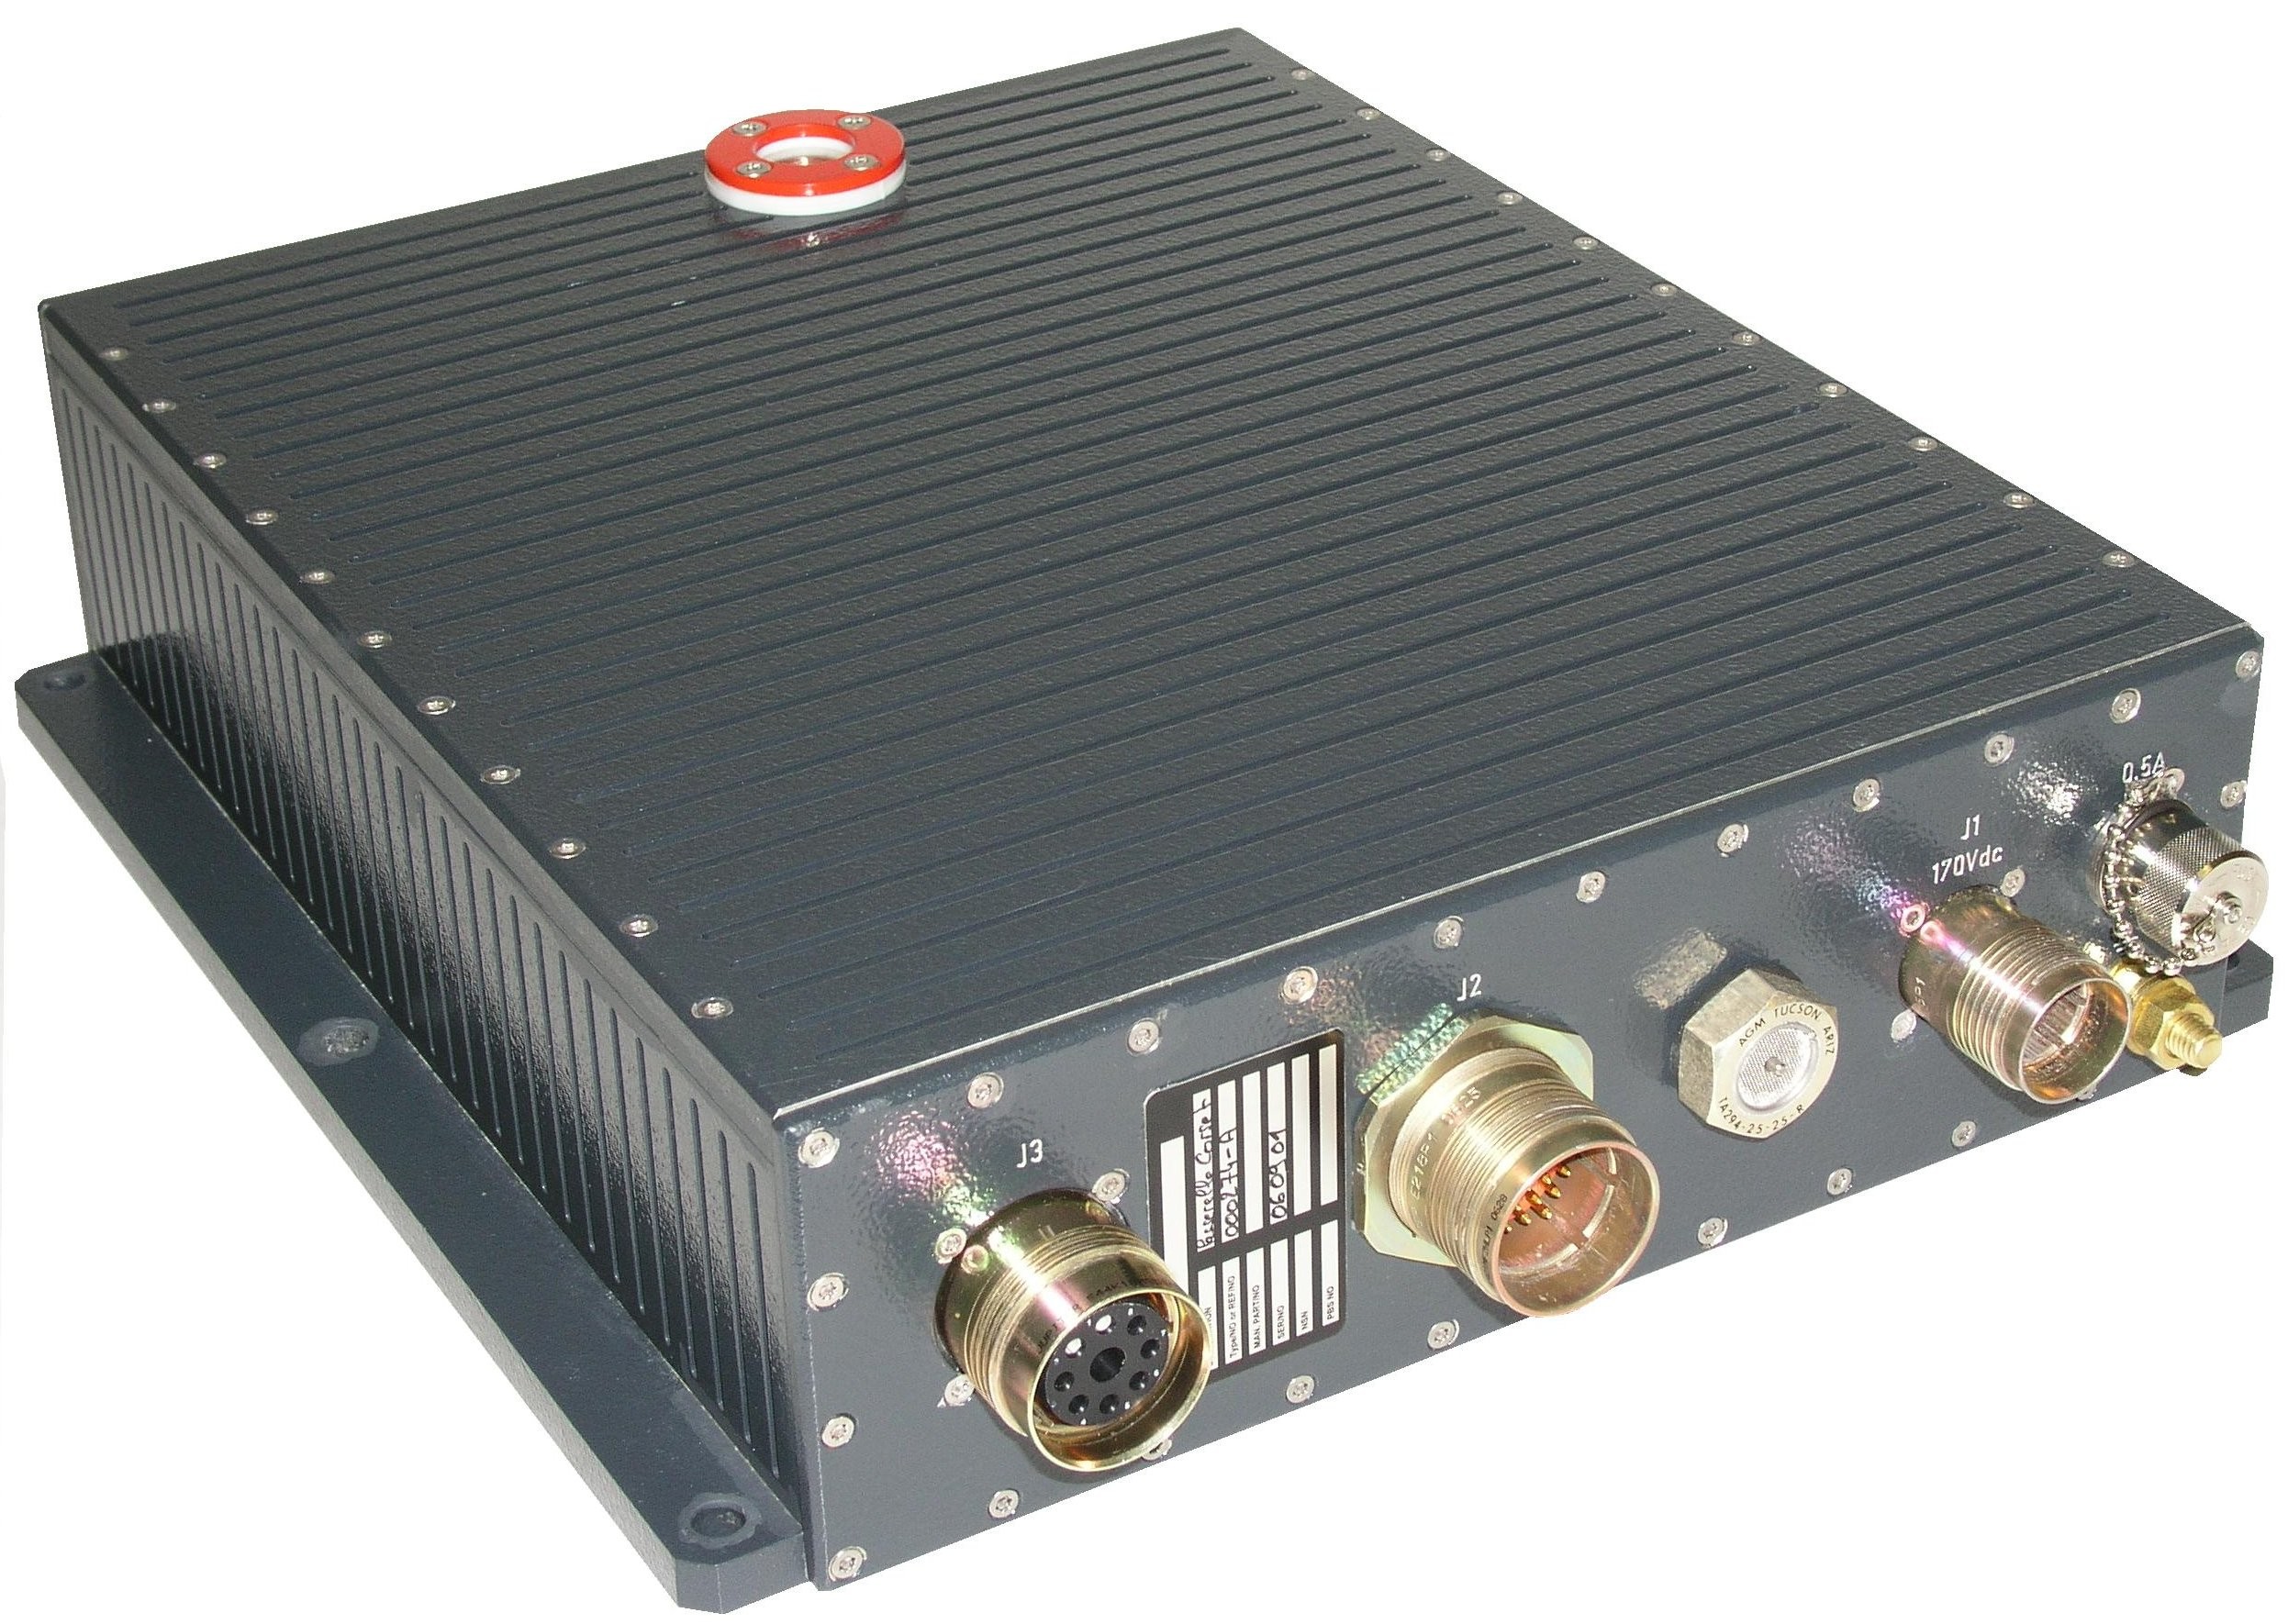 Passerelle communication NAV NTDS 1553 Ethernet